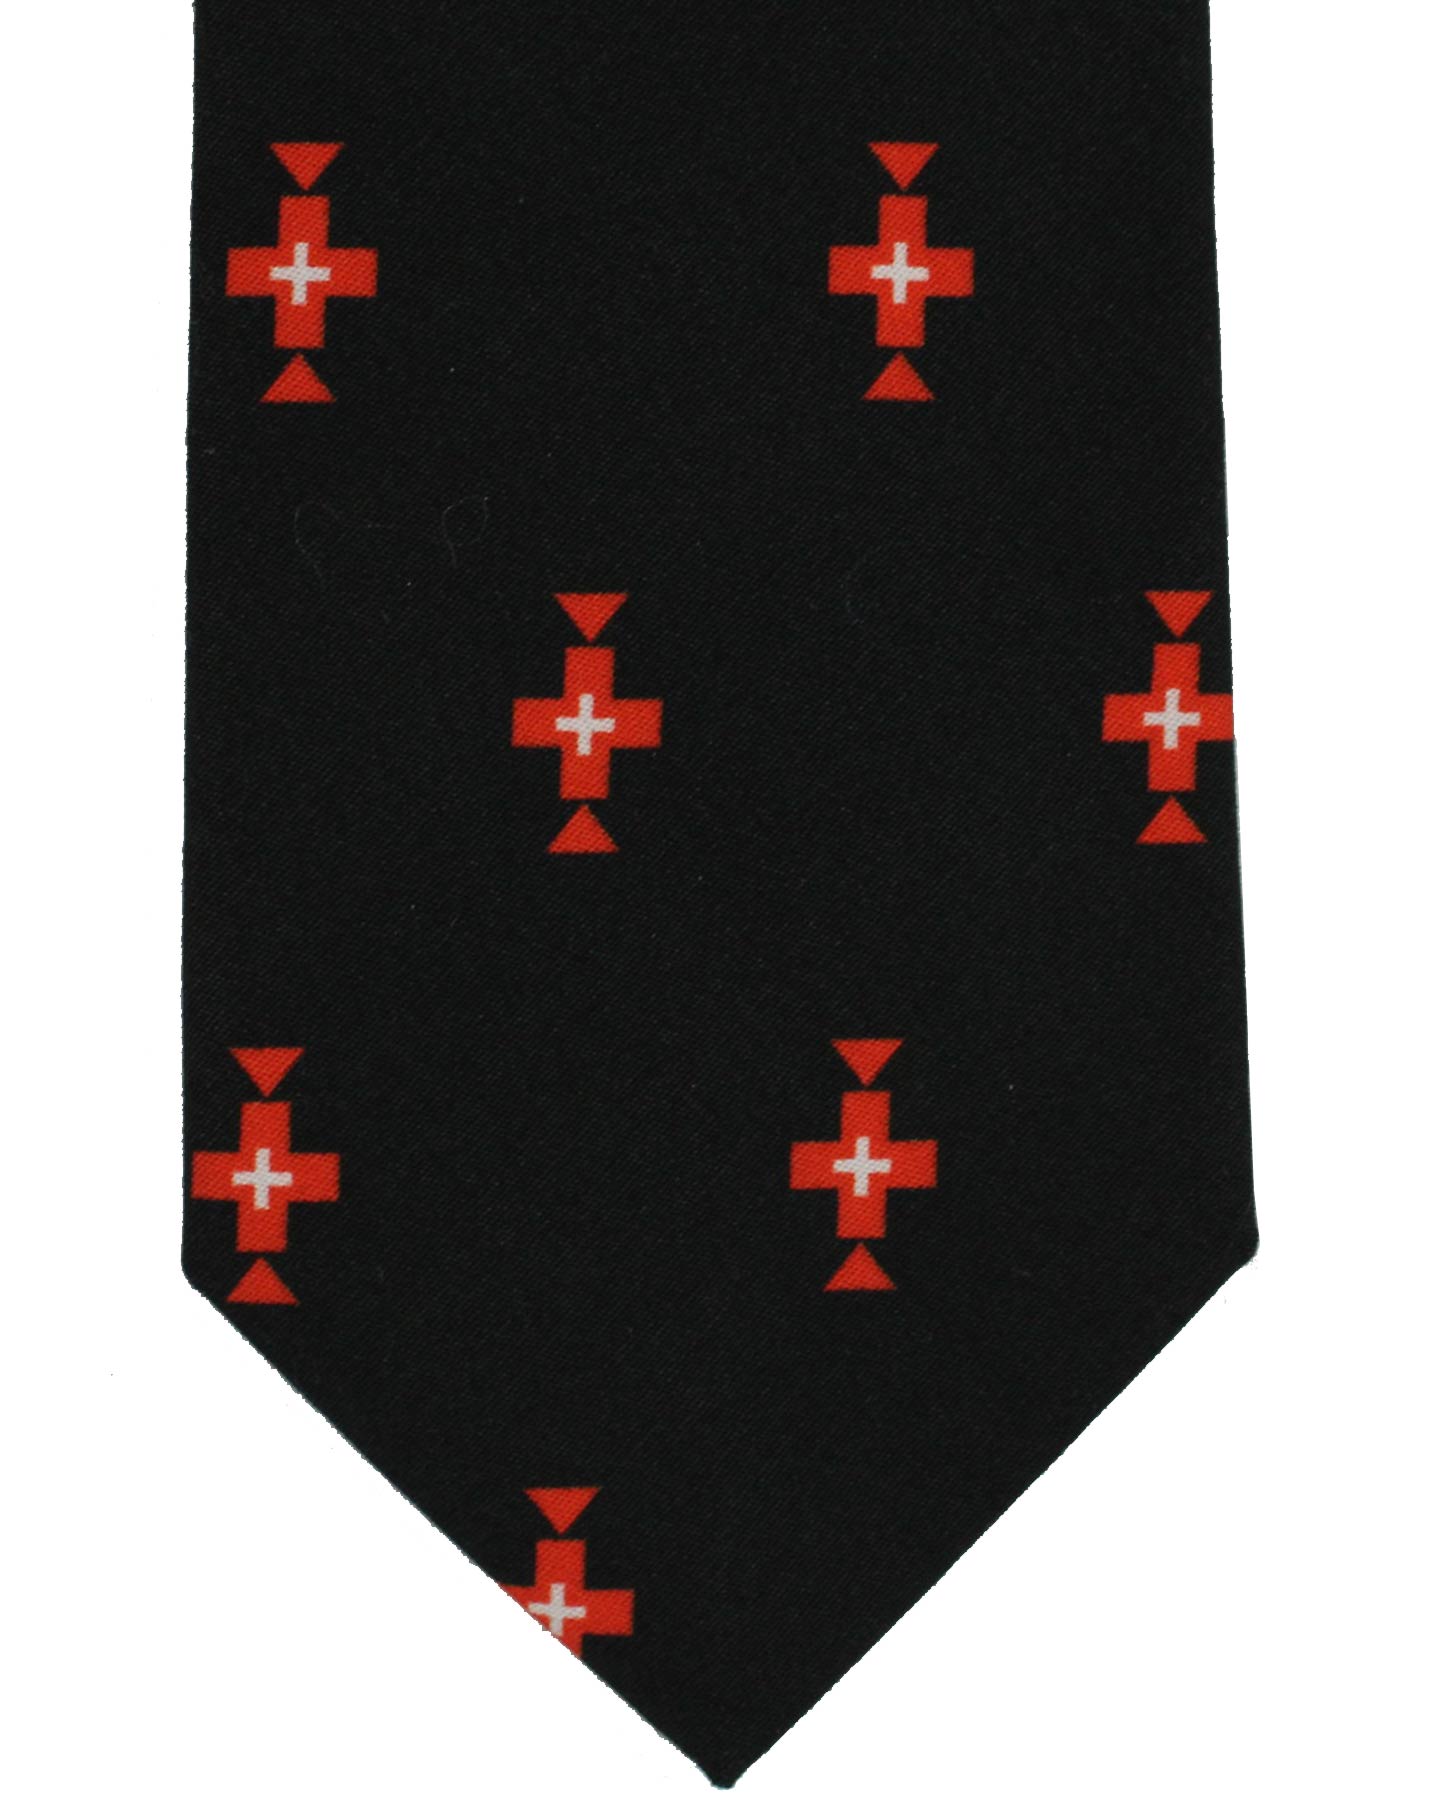 Givenchy Tie Black Red Cross Design - Narrow Necktie